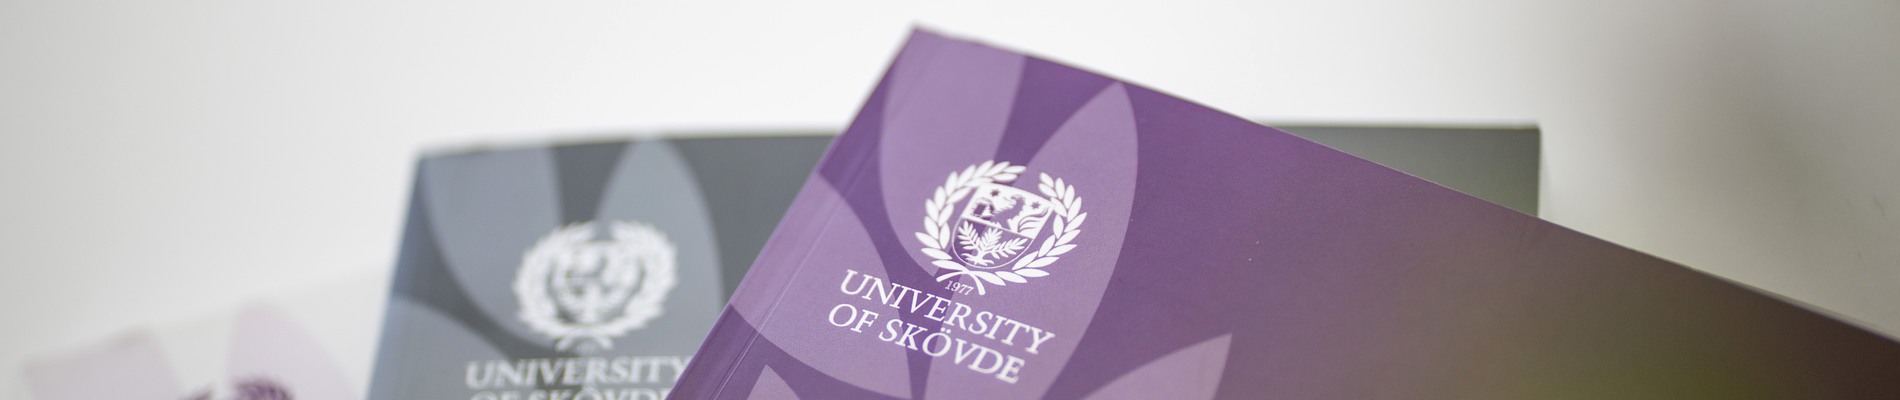 Publications - University of Skövde